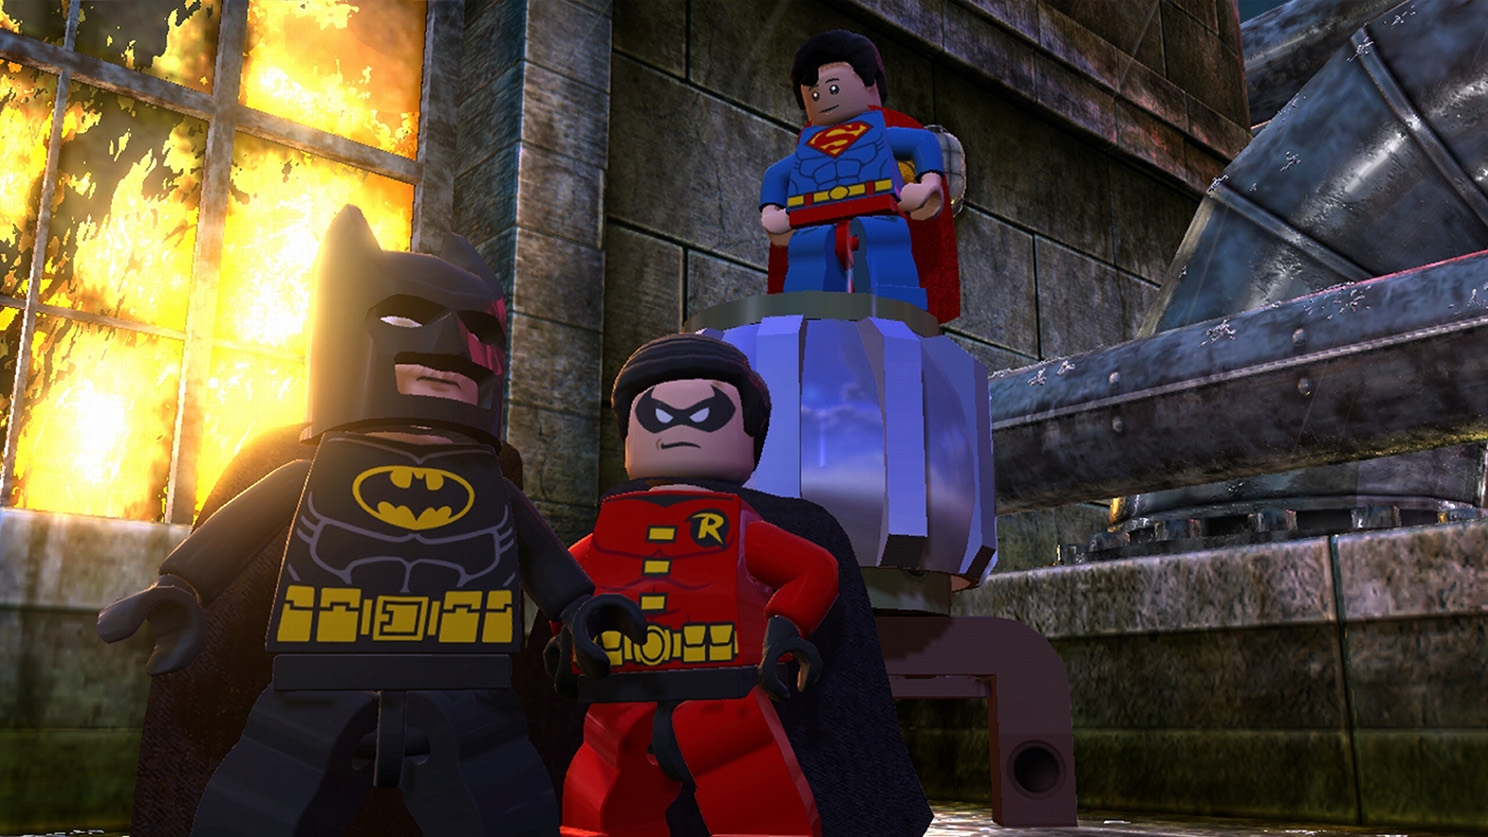 LEGO® Batman™: DC Super Heroes - LEGO® DC Games  for kids